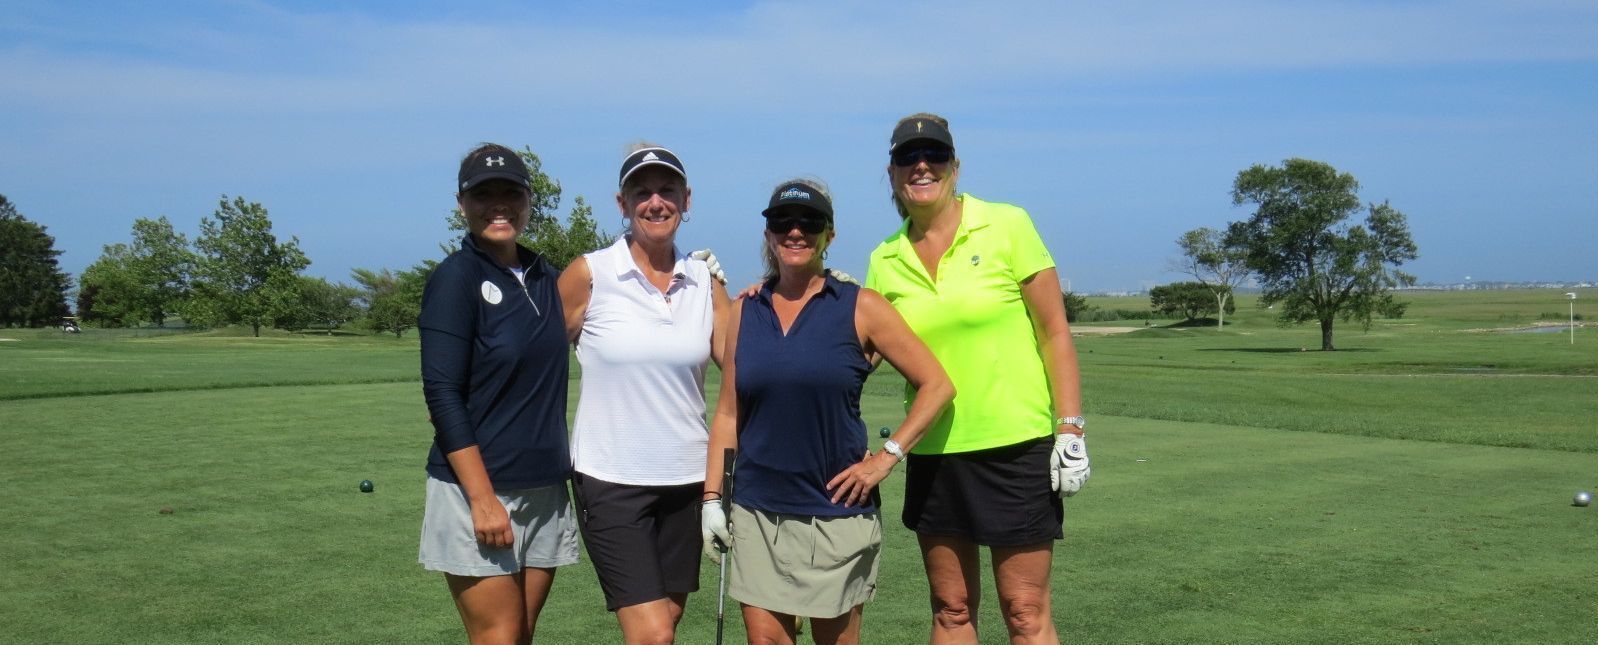 Participants in the annual Go Blue for CASA Golf Tournament